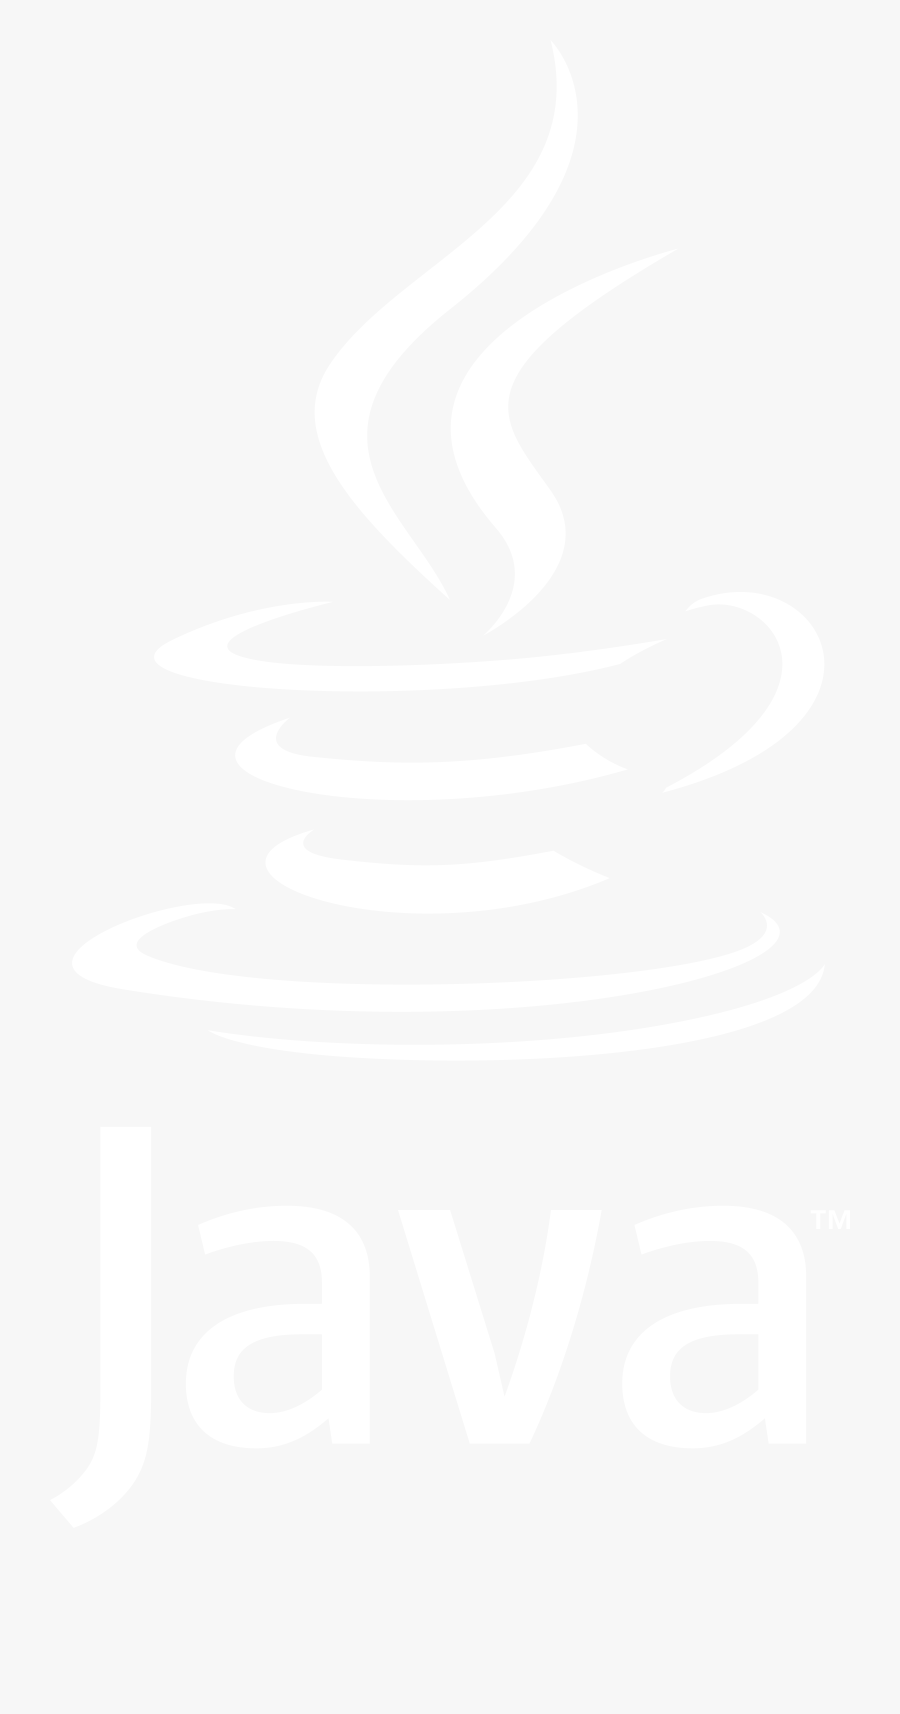 Java Png Transparent Images - Ihg Logo White Png, Transparent Clipart